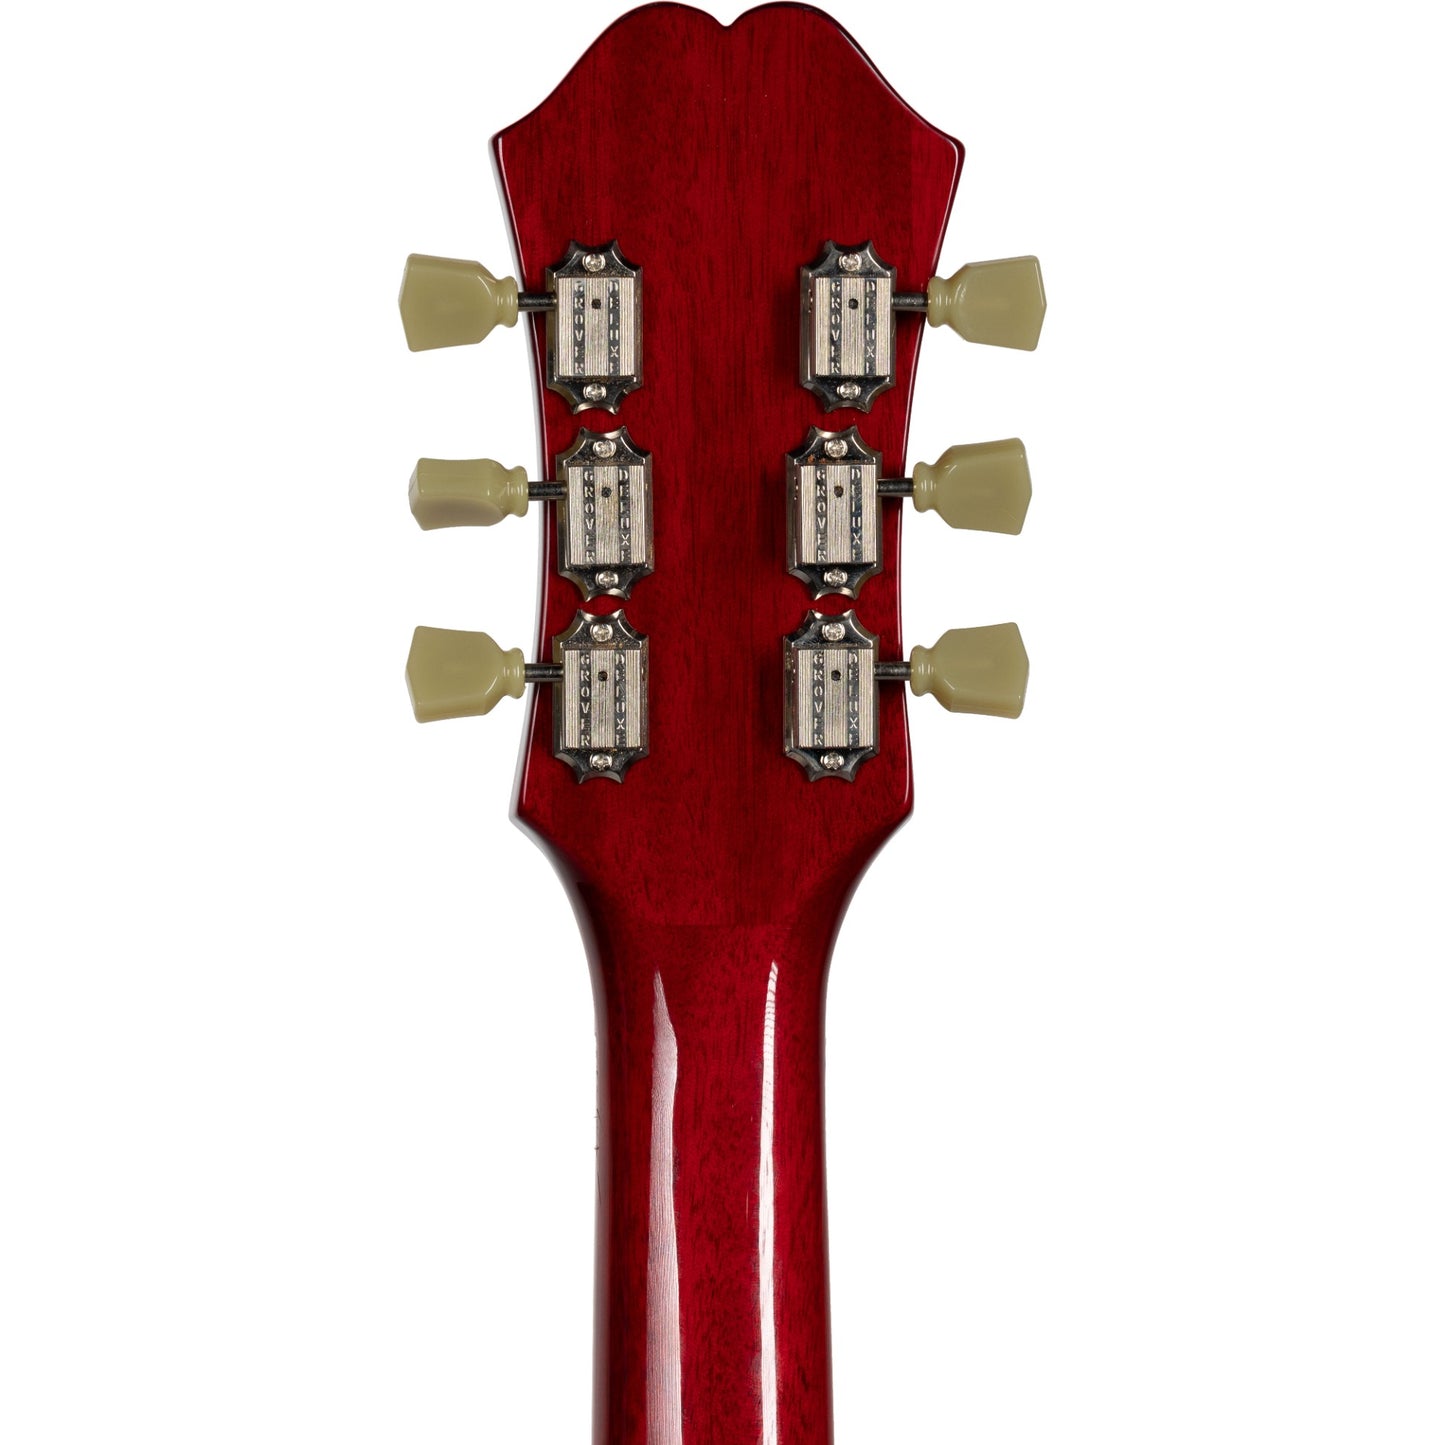 Epiphone ES-339 Semi Hollow Electric Guitar, Cherry